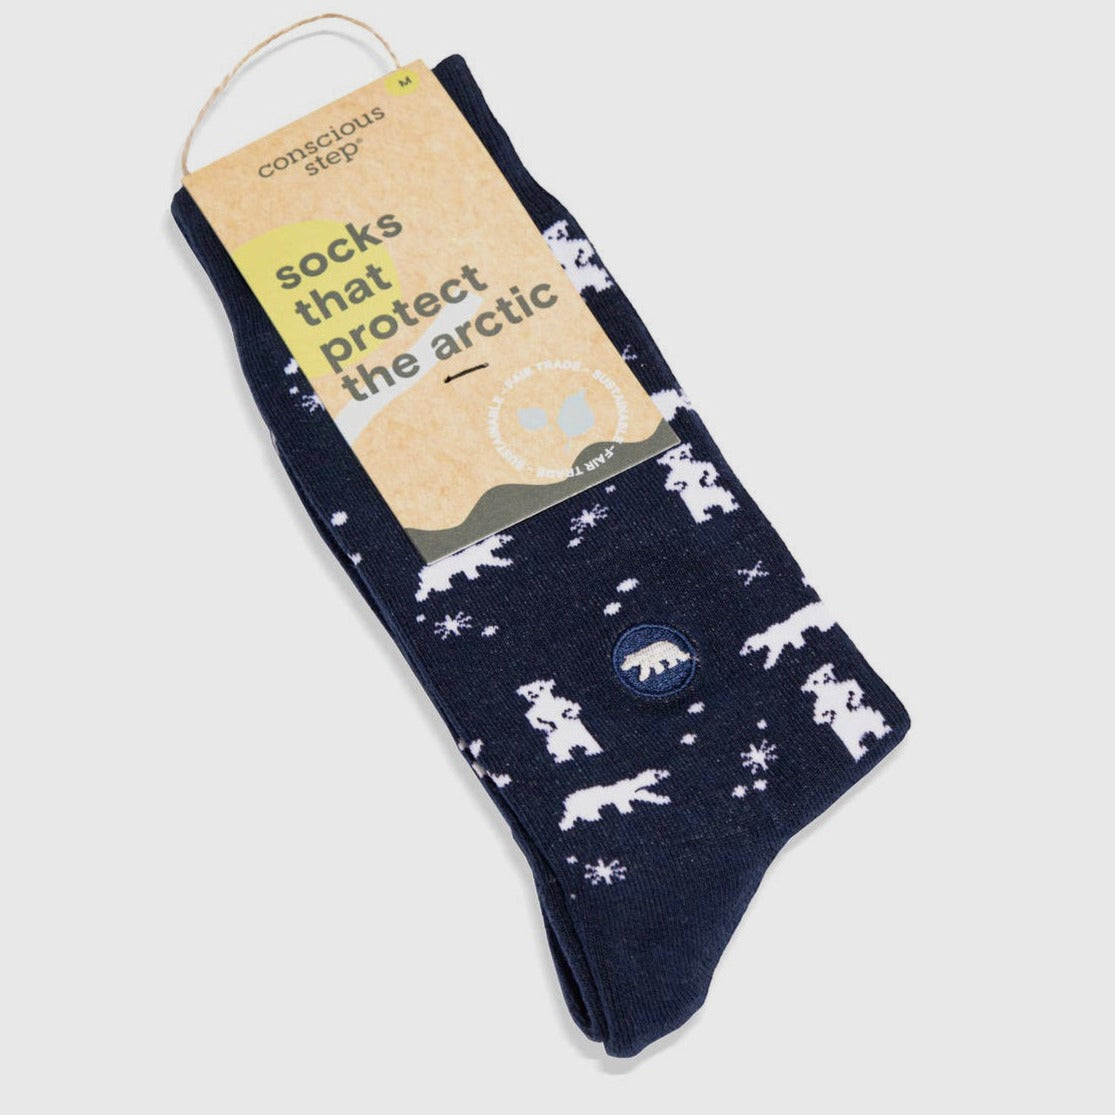 Socks that Protect Polar Bears